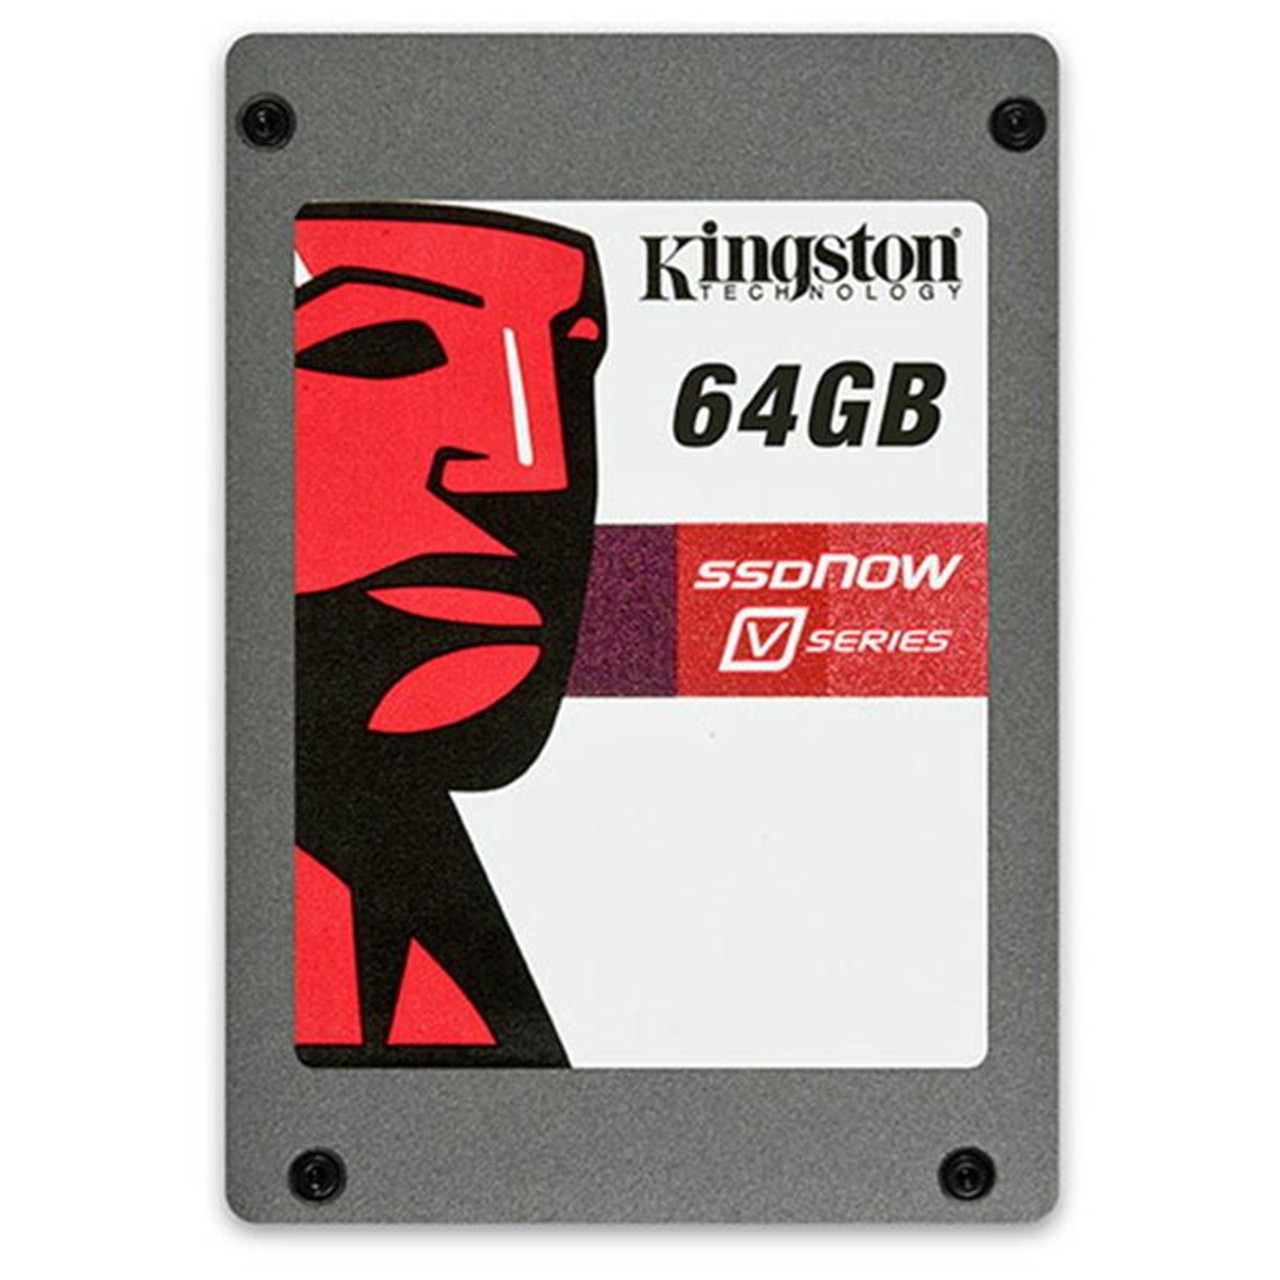 SNV125-S2/64GB Kingston SSDNow V Series 64GB MLC SATA 3Gbps 2.5-inch Internal Solid State Drive